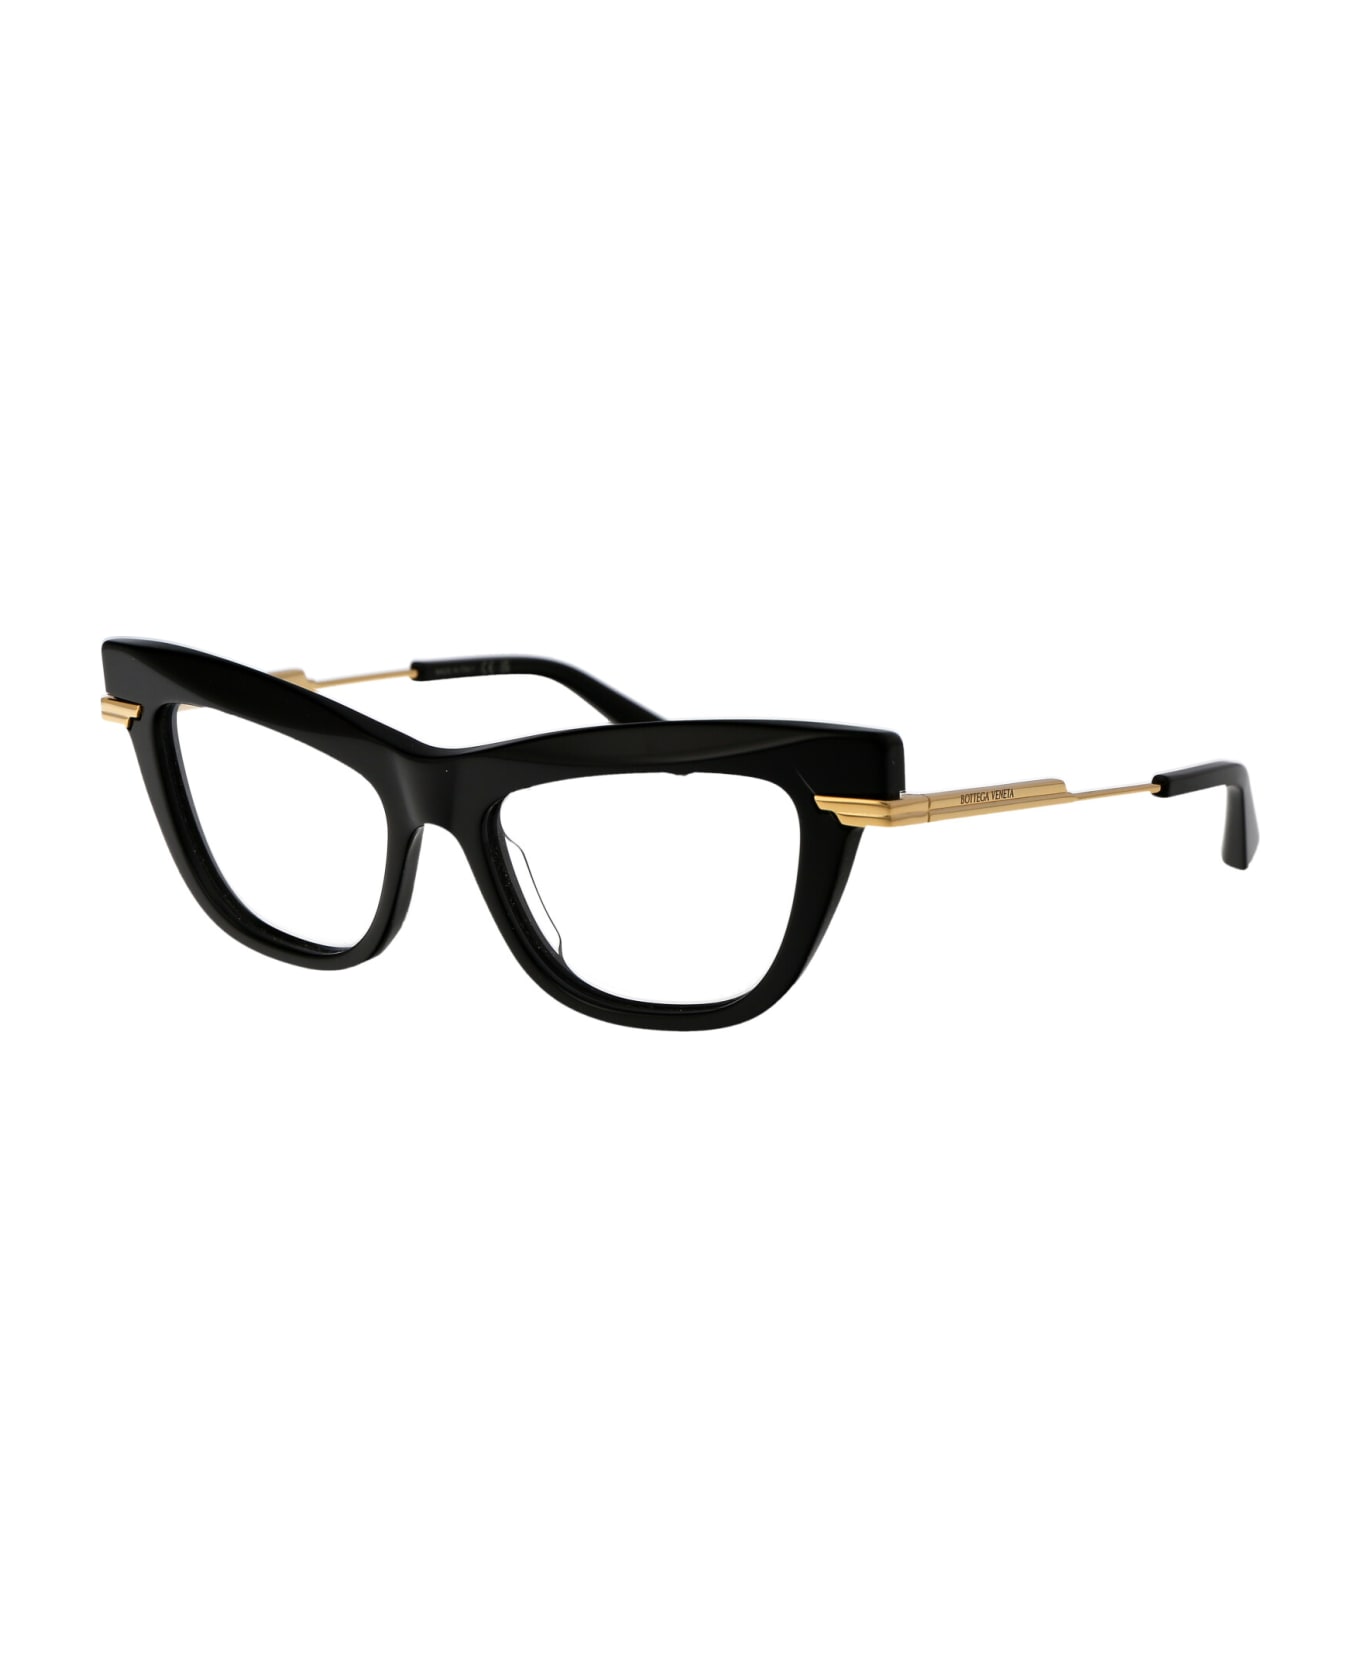 Bottega Veneta Eyewear Bv1266o Glasses - 001 BLACK GOLD TRANSPARENT